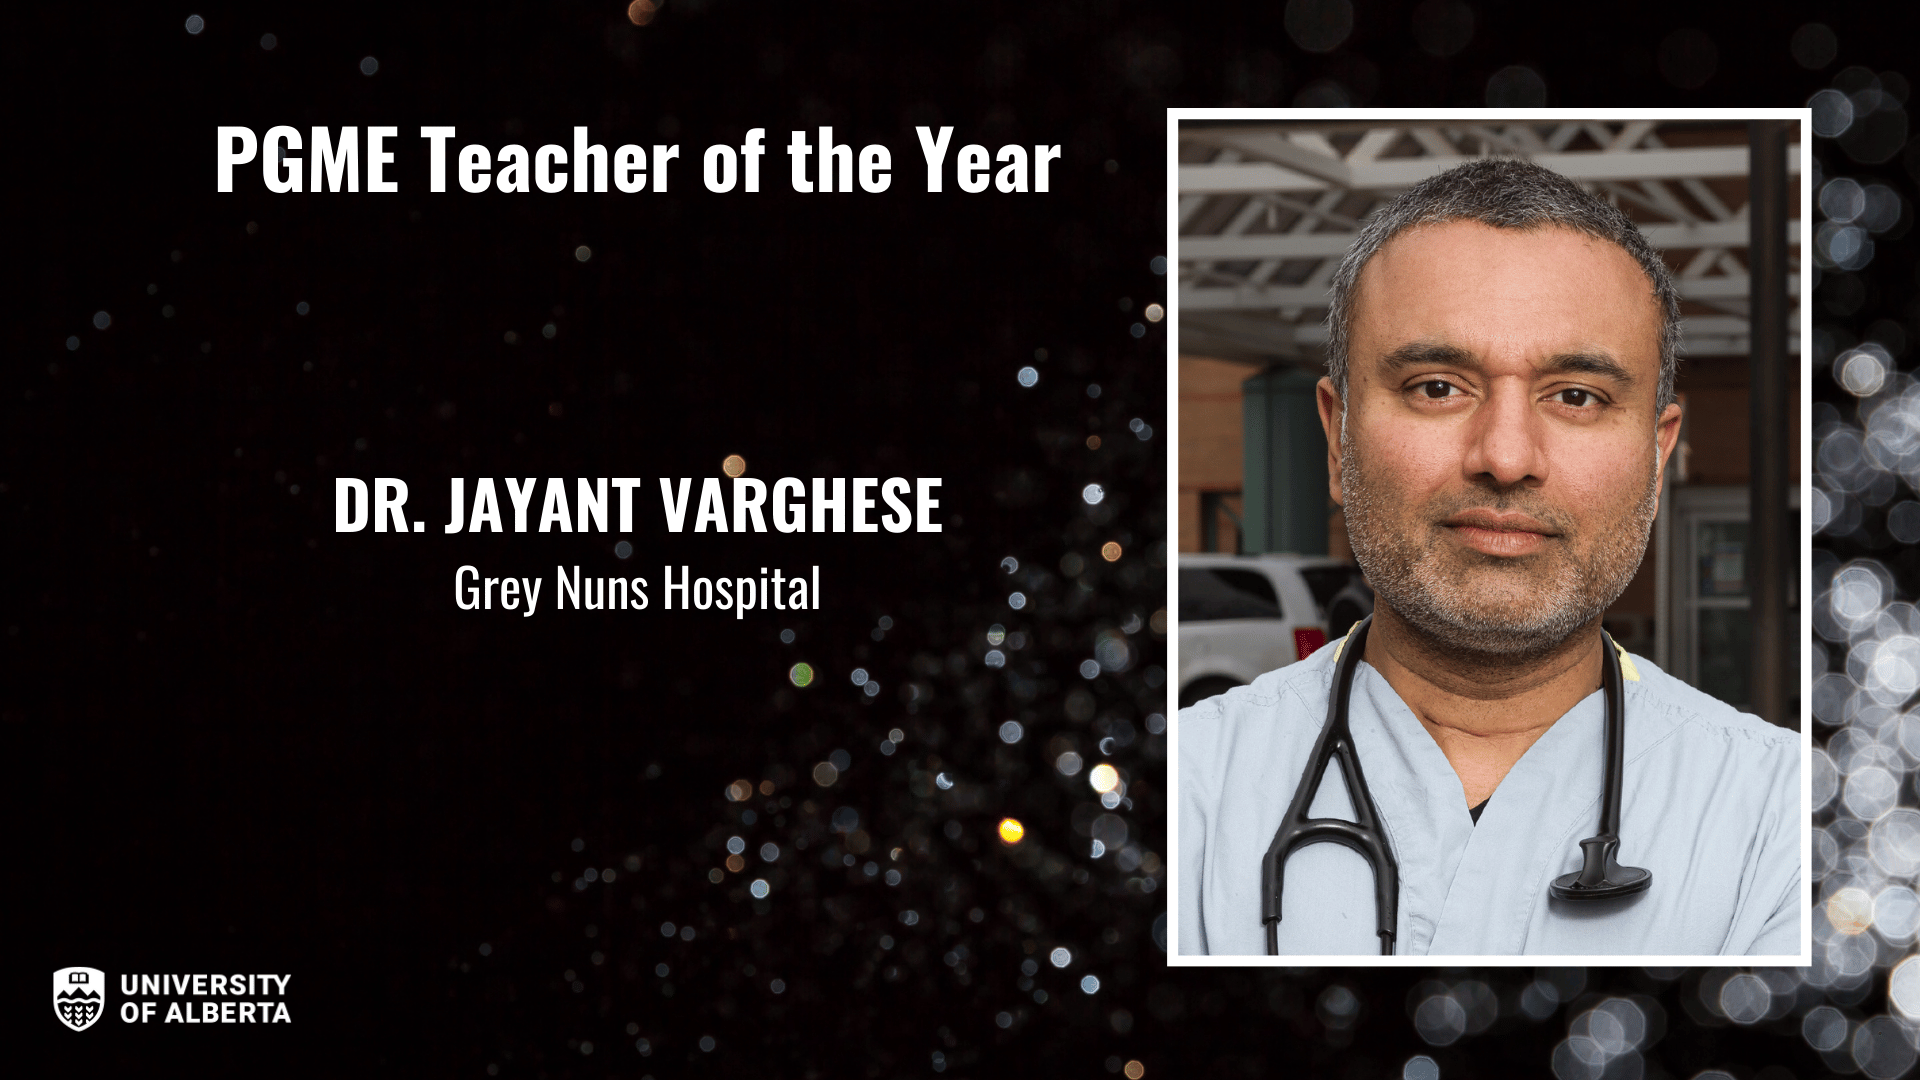 Dr. Jayant Varghese